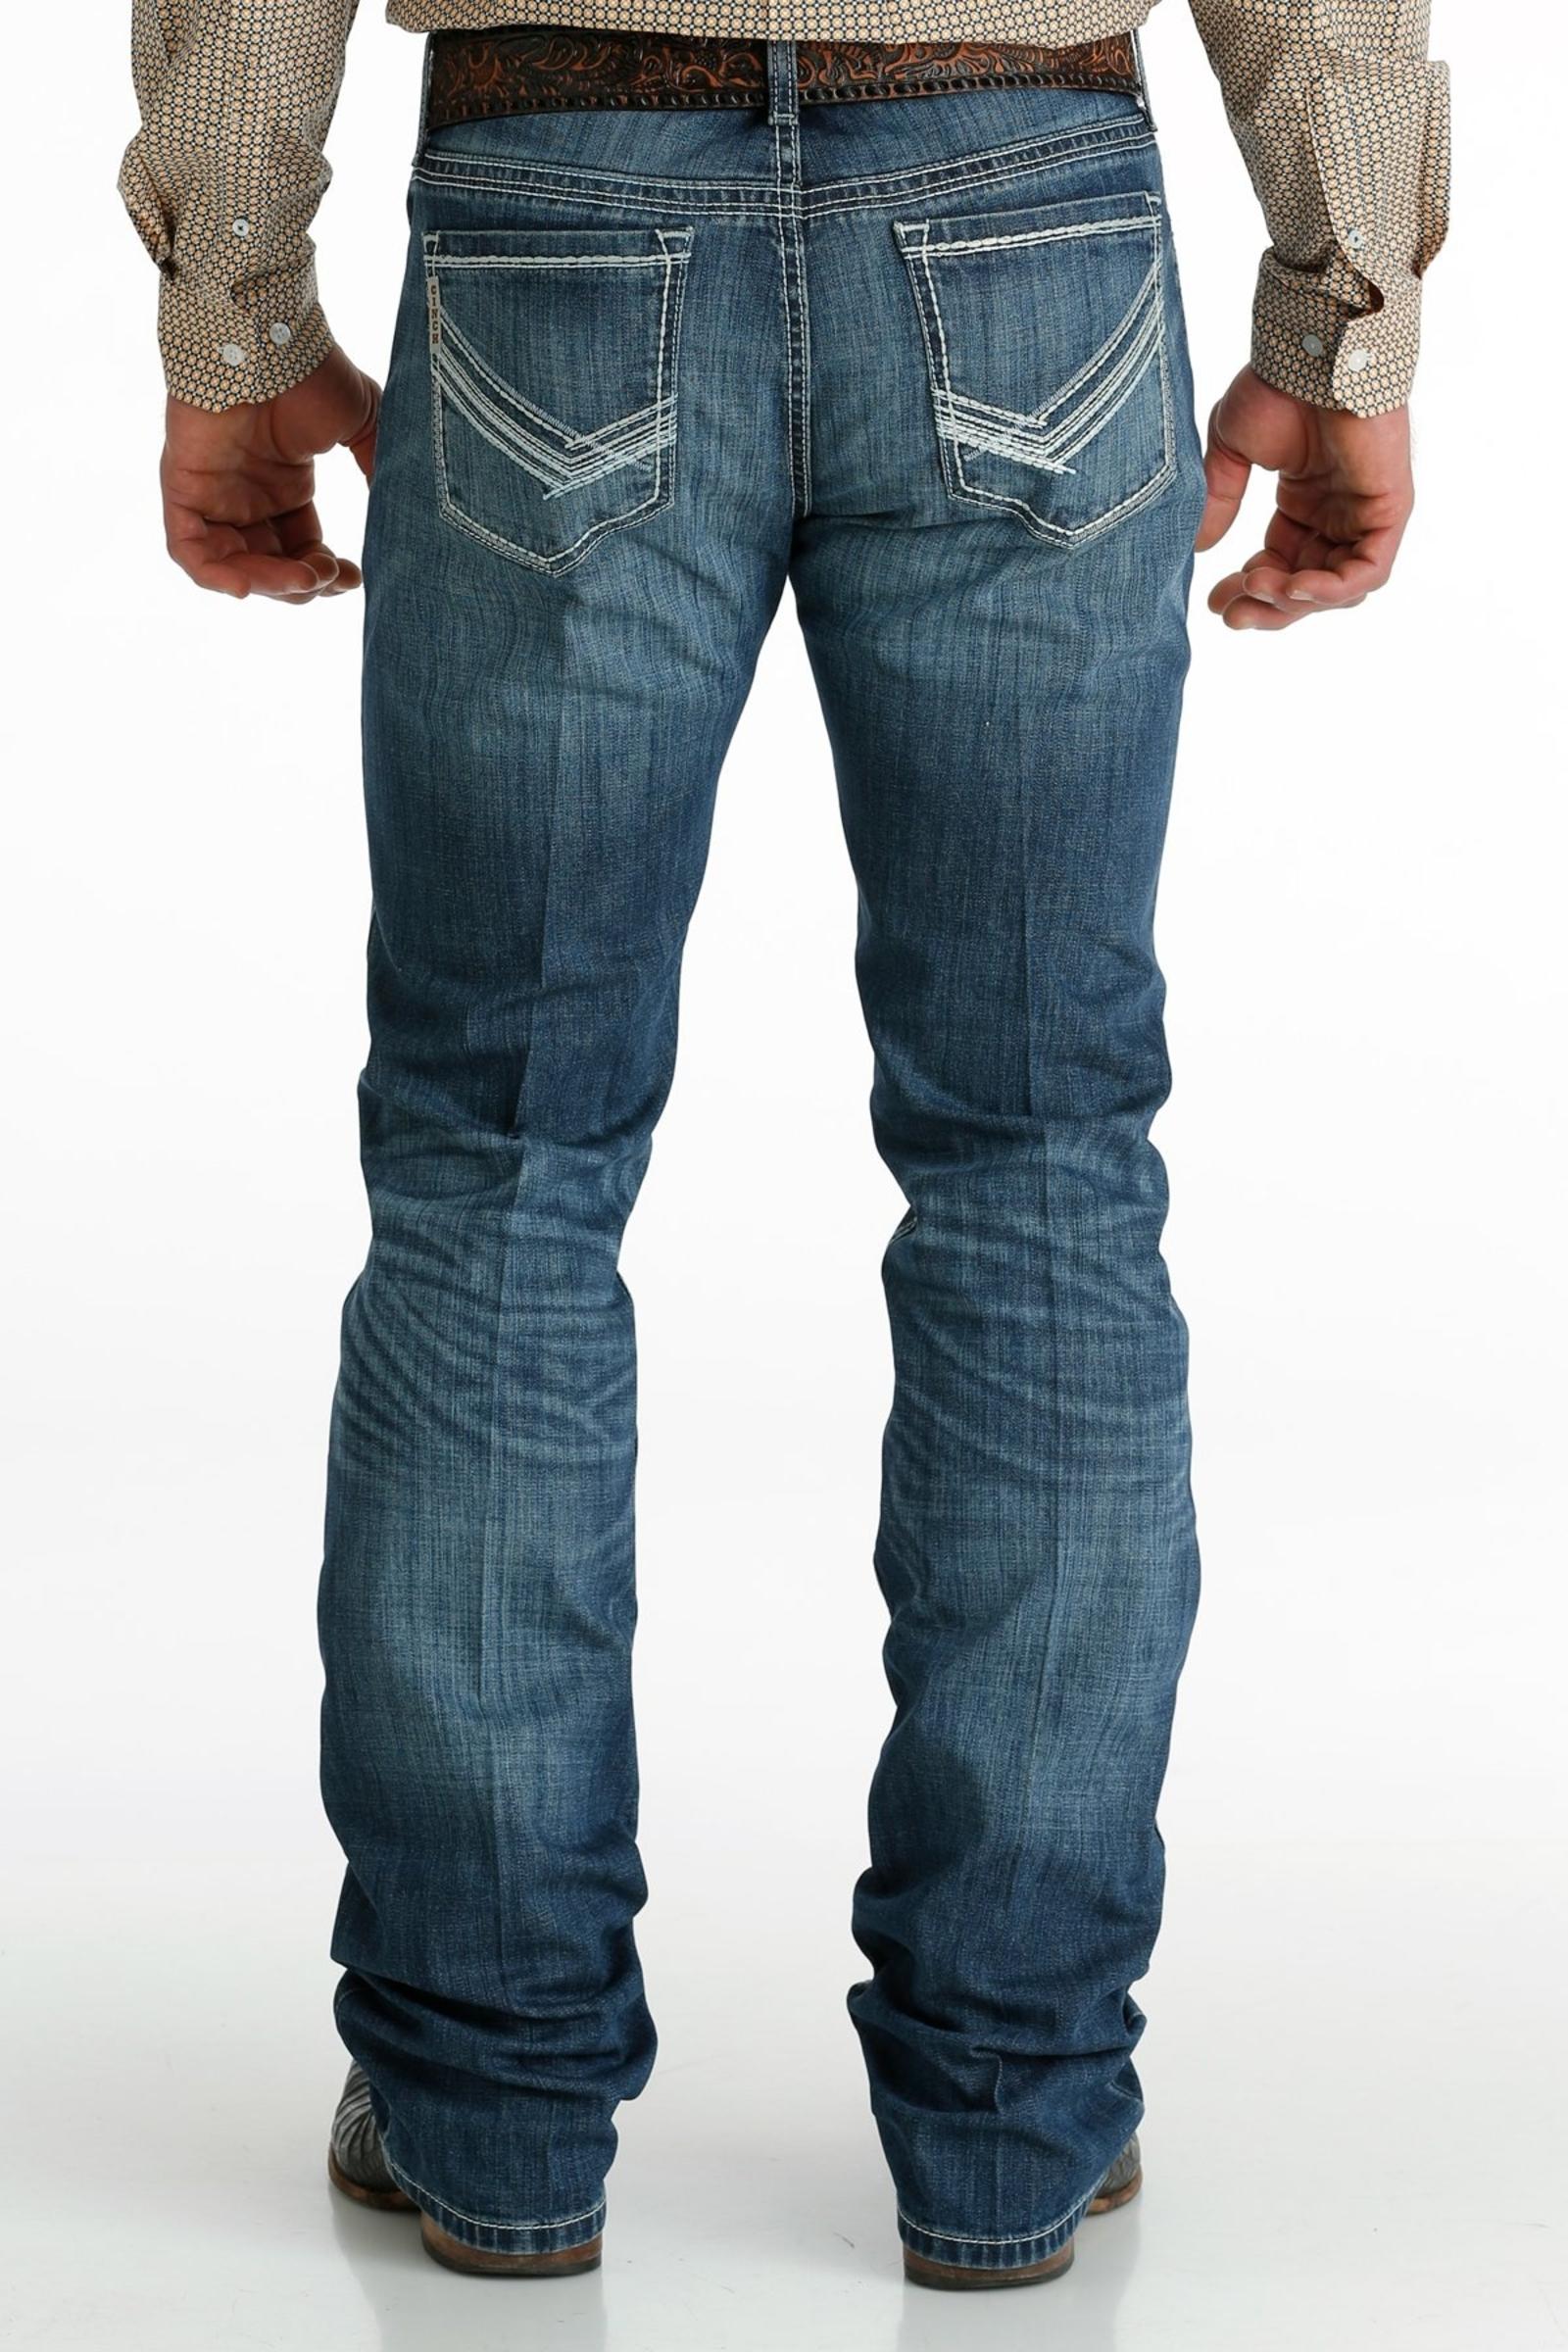 Cinch Jeans Men's Slim Fit Ian - Medium Stonewash back